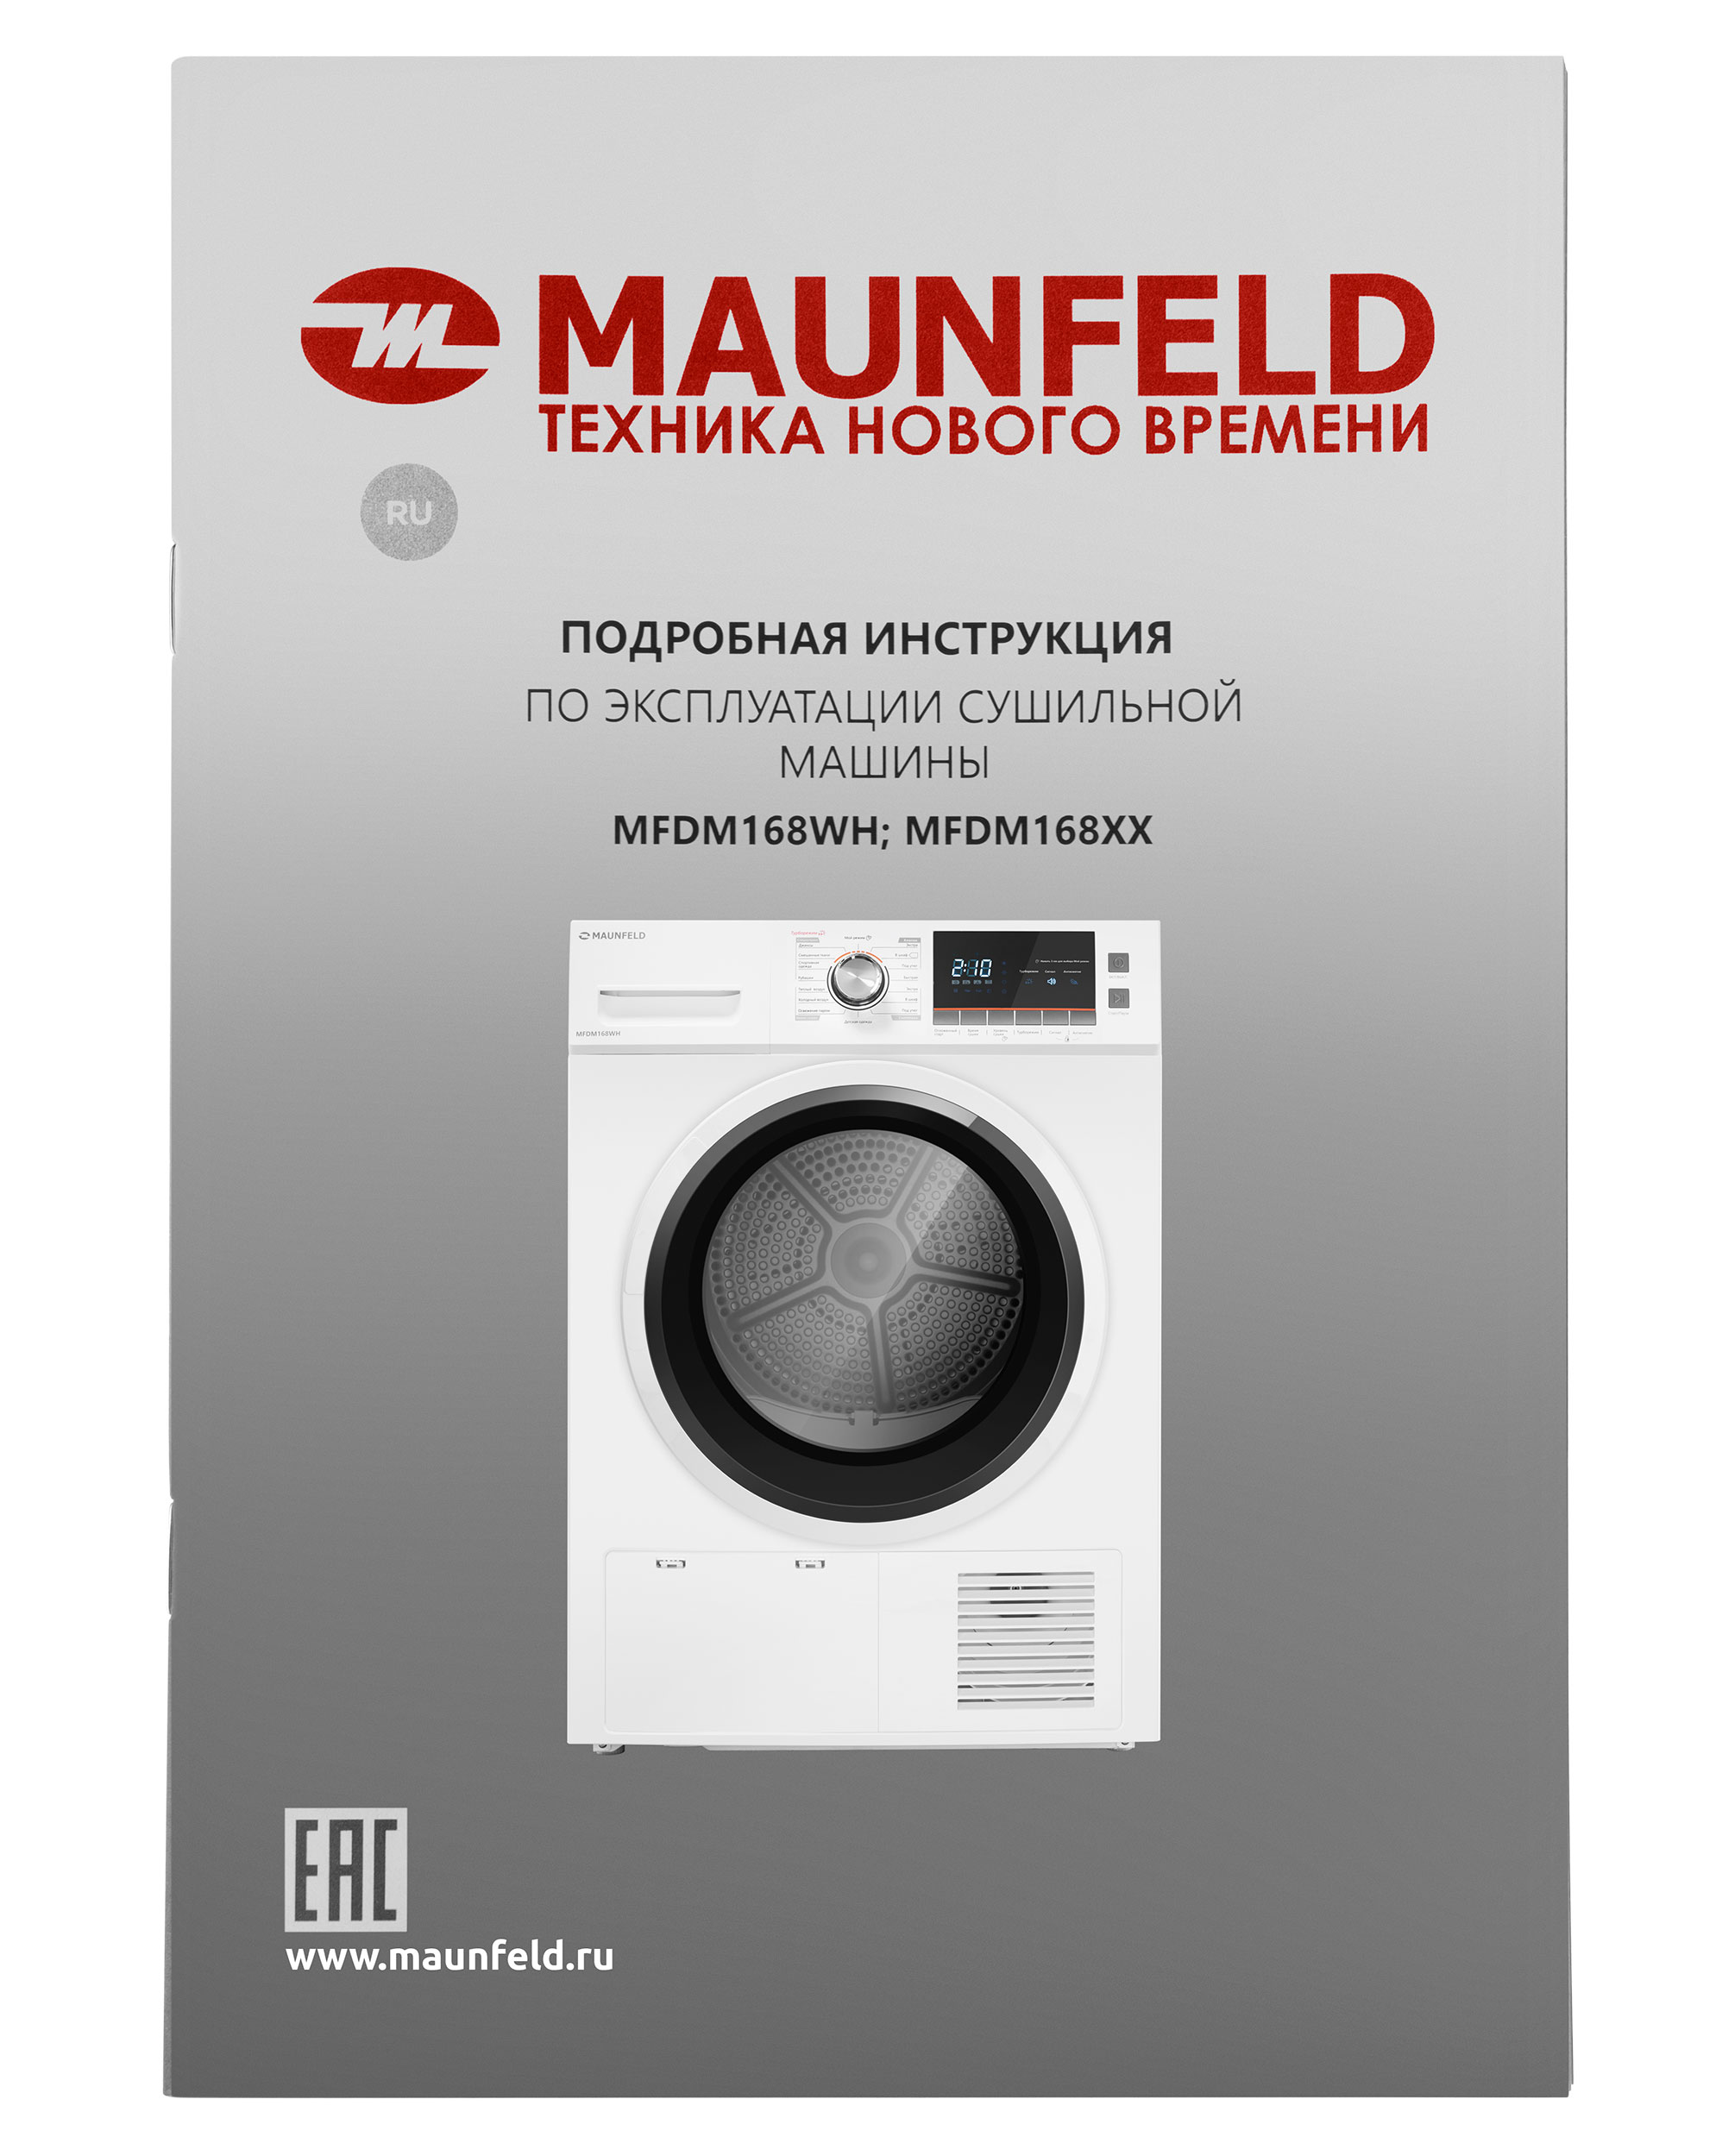 MAUNFELD MFDM168WH